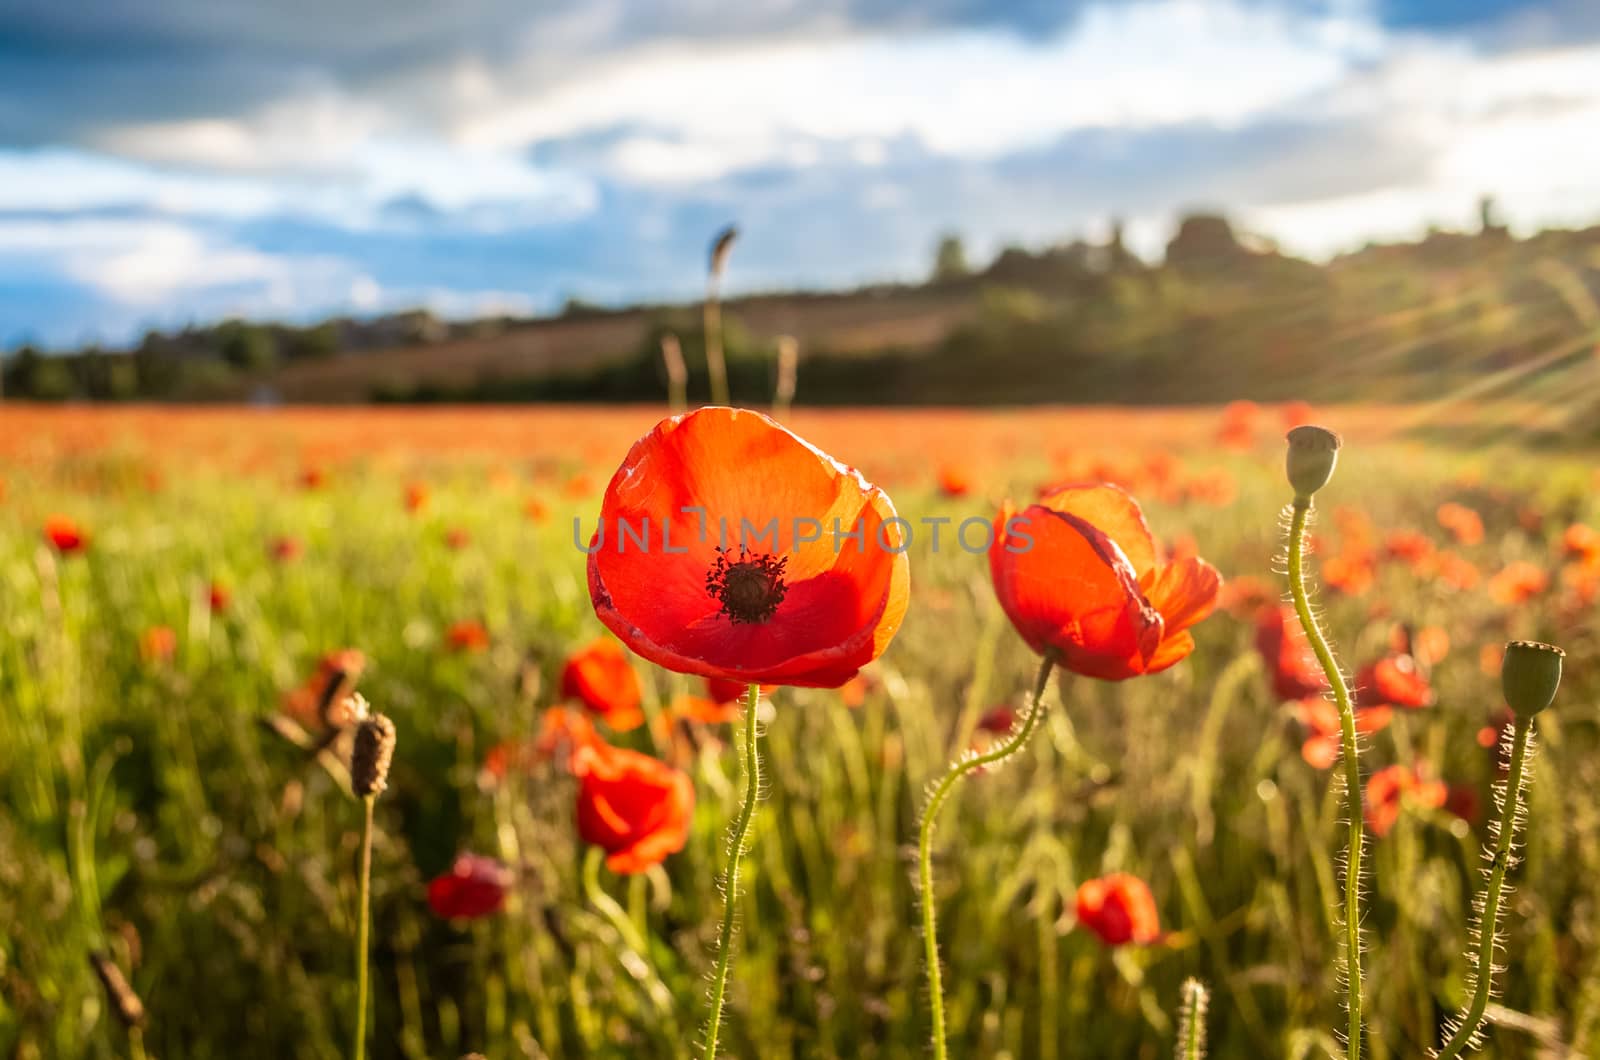 Amazing Poppy Blossom in a Poppy Field by kstphotography